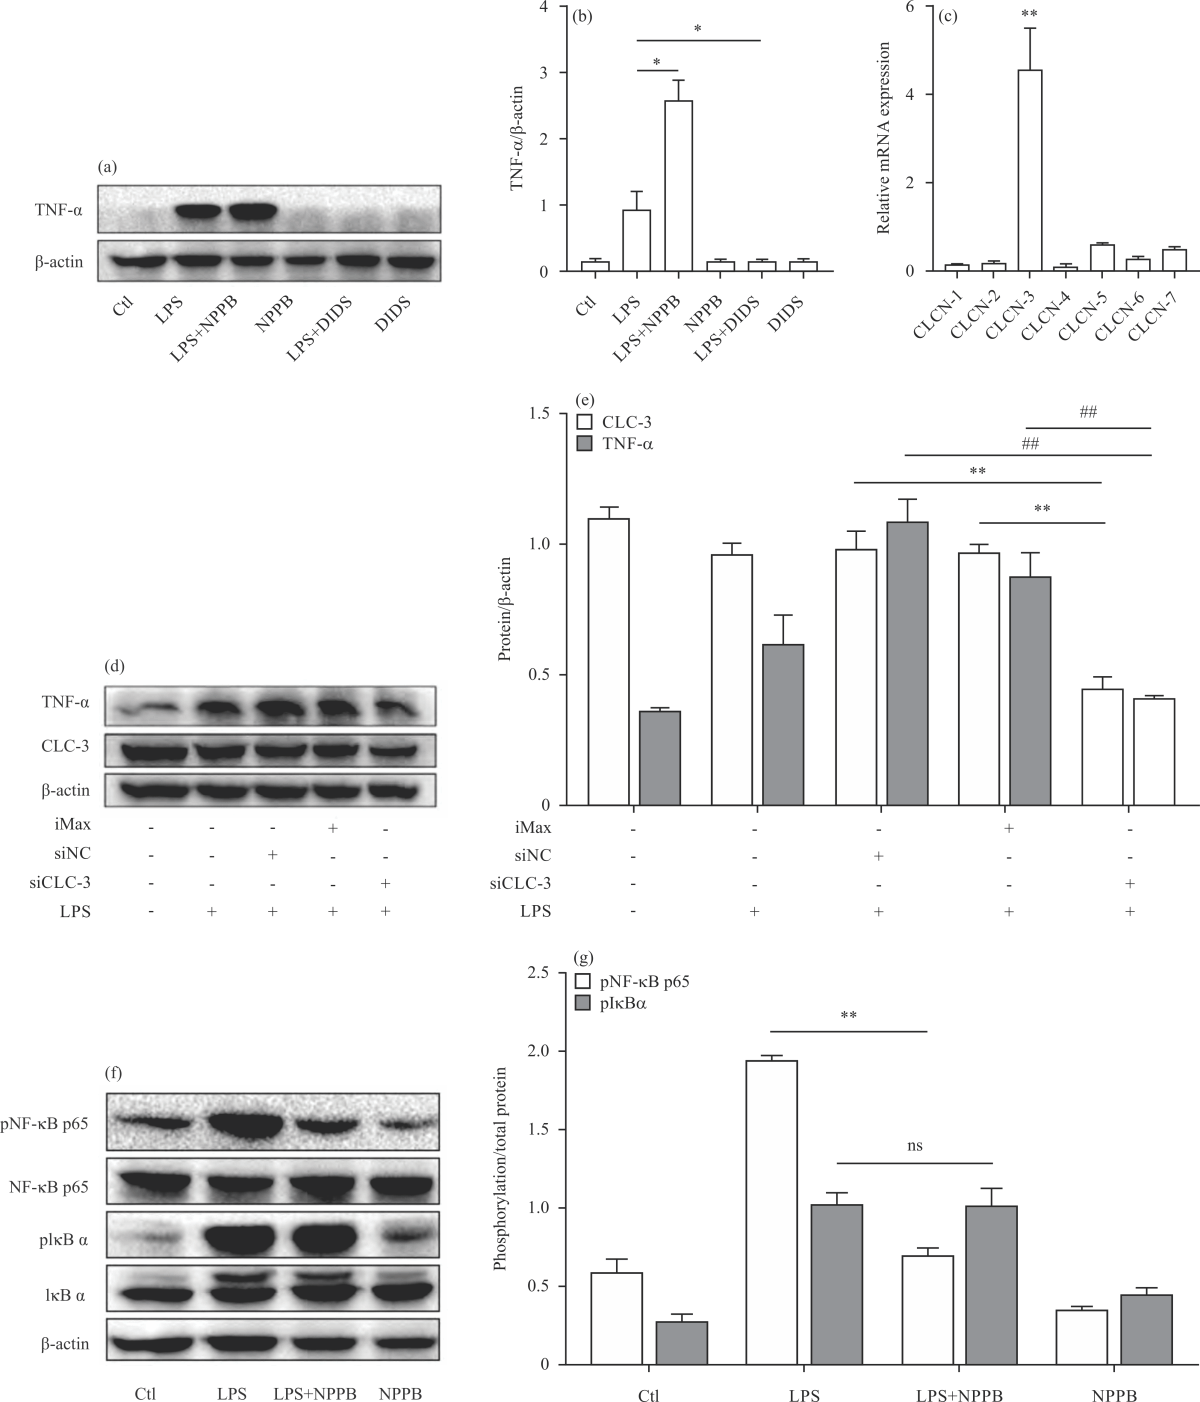 Image for - 5-Nitro-2-(3-phenylpropylamino) Benzoic Acid Promotes Lipopolysaccharide-induced Inflammation via p38 MAPK Pathway in RAW264.7 Macrophages